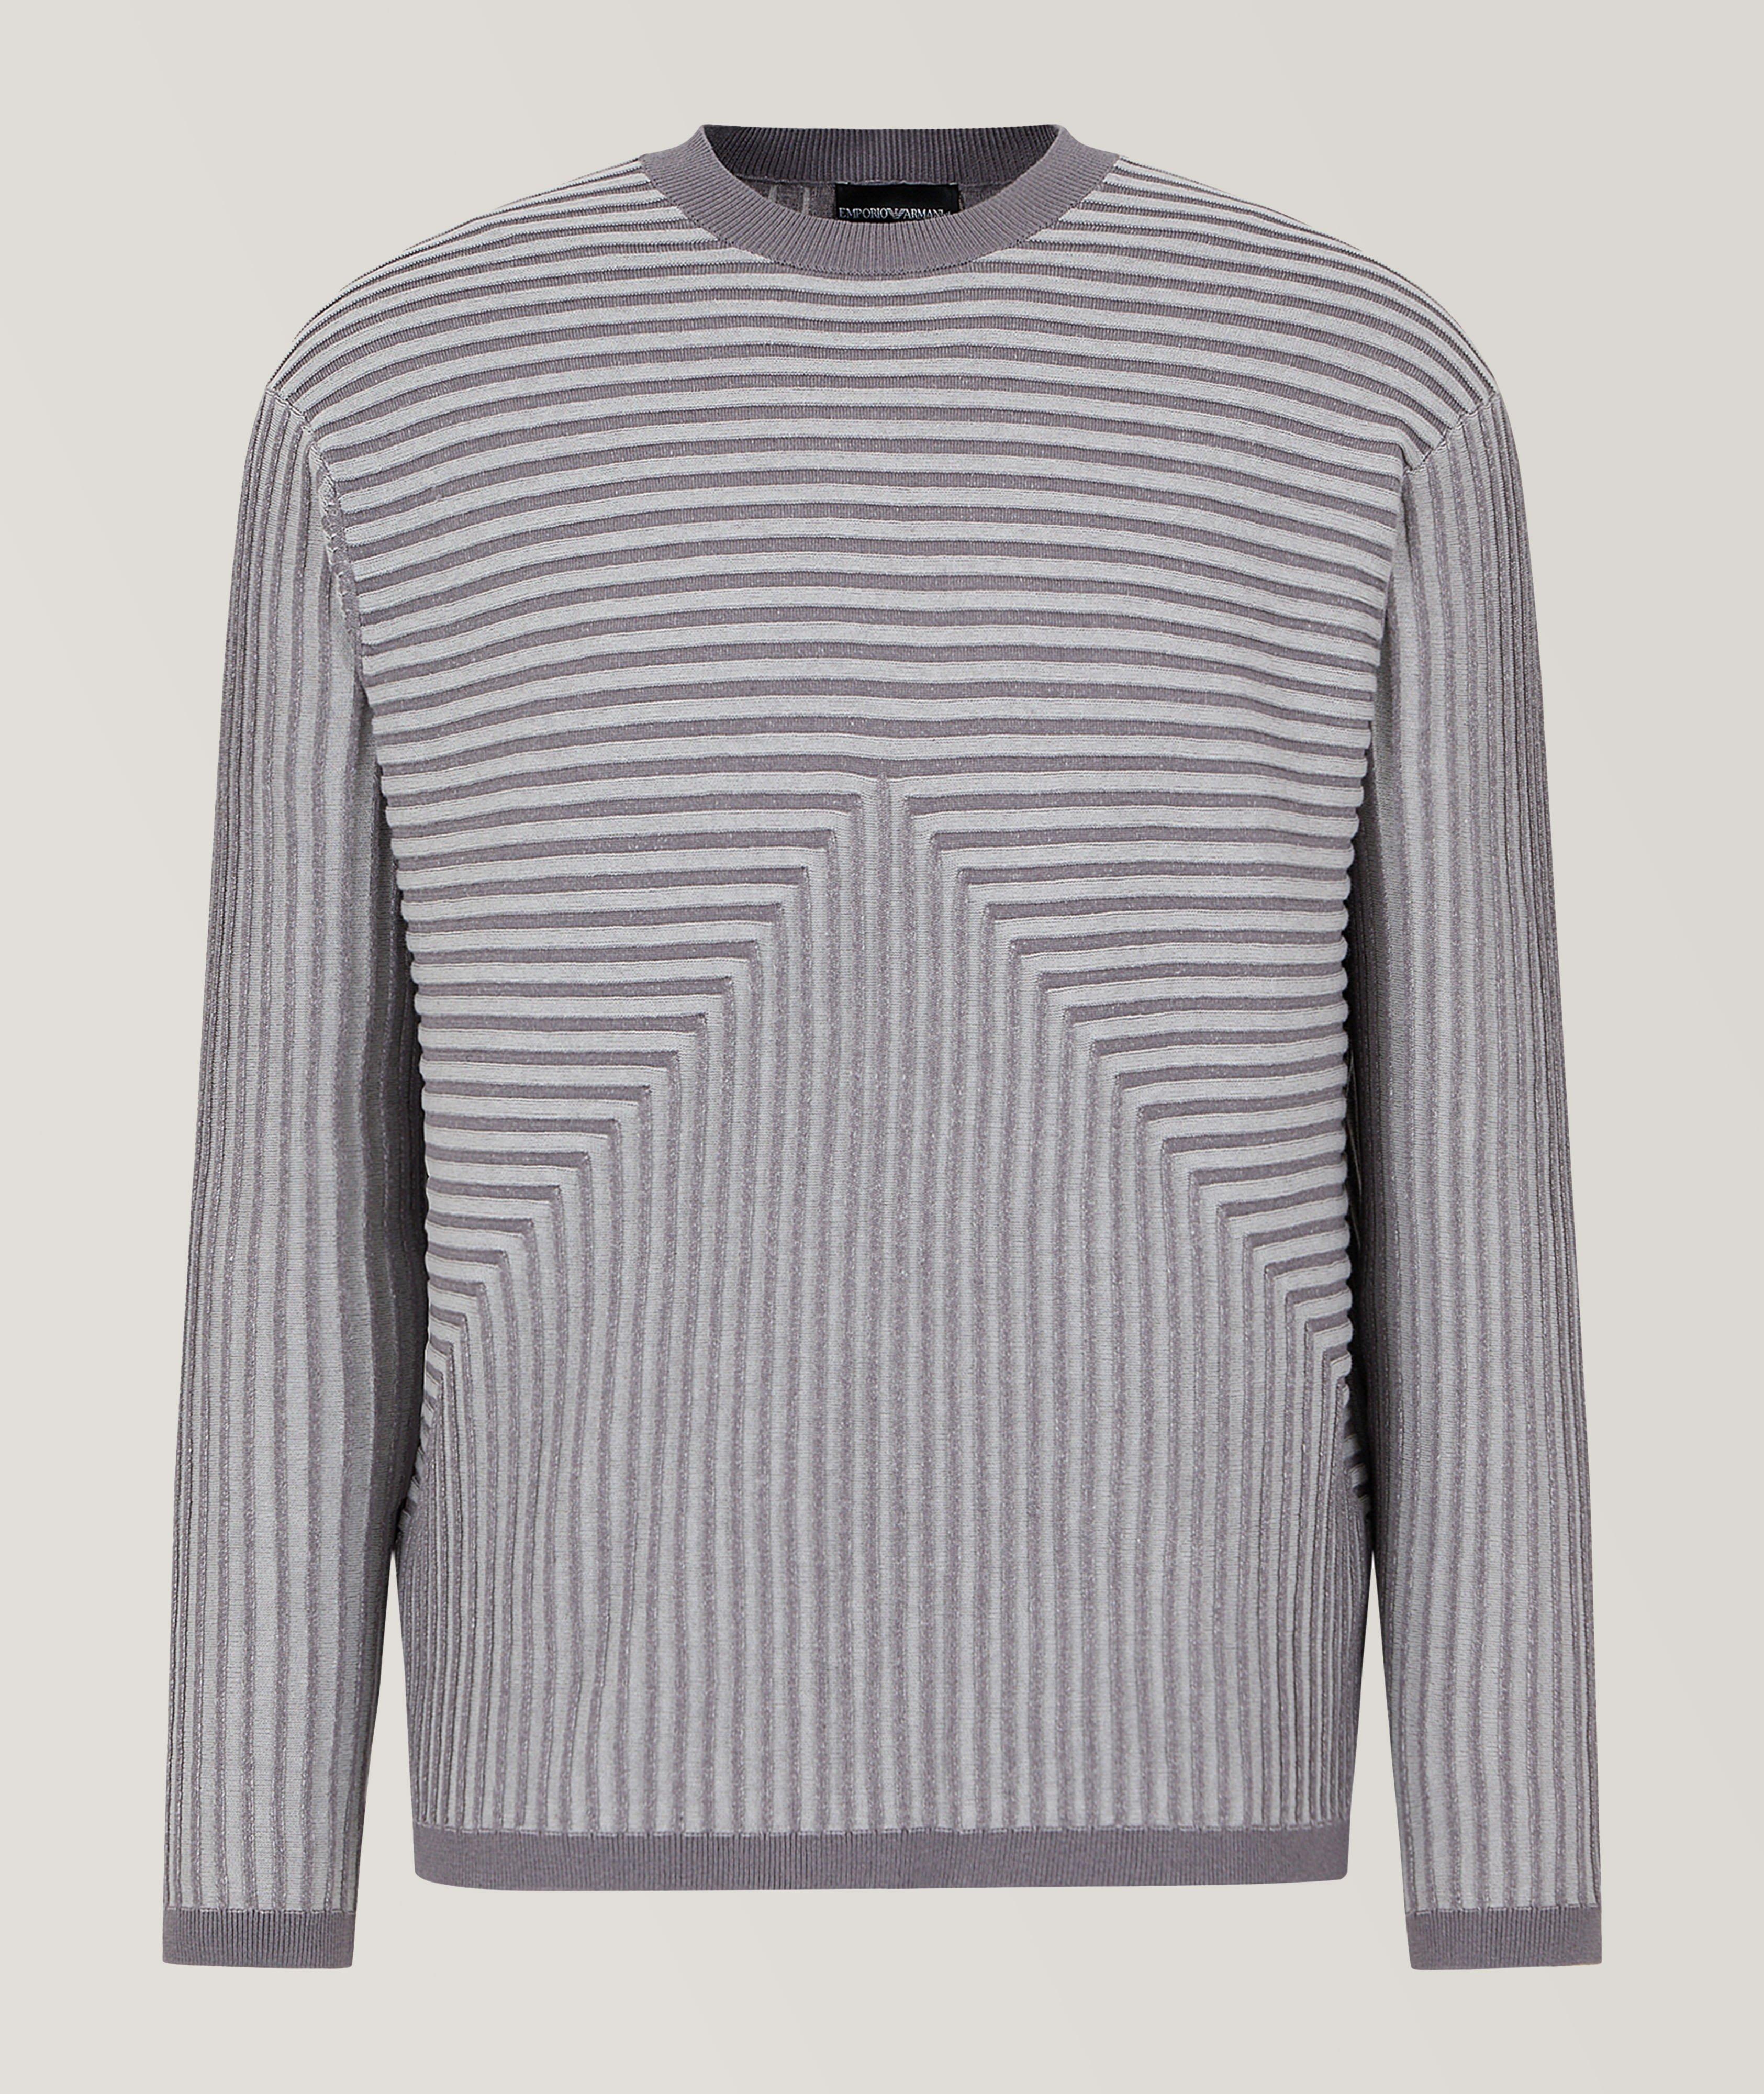 Wide Rib Striped Sweater image 0